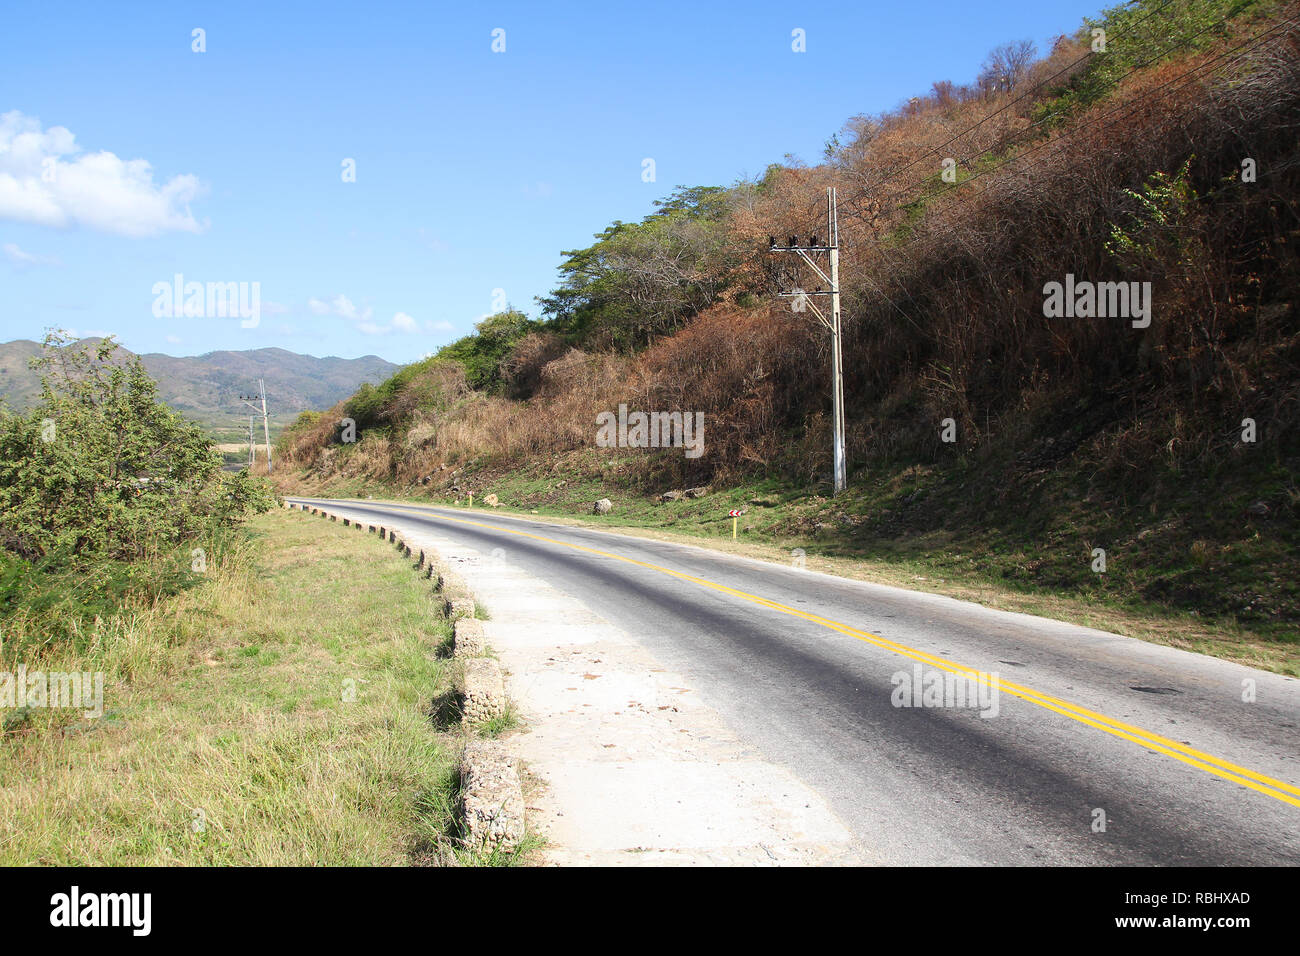 Countryside road in Cuba, near Trinidad. Asphalt road. Stock Photo